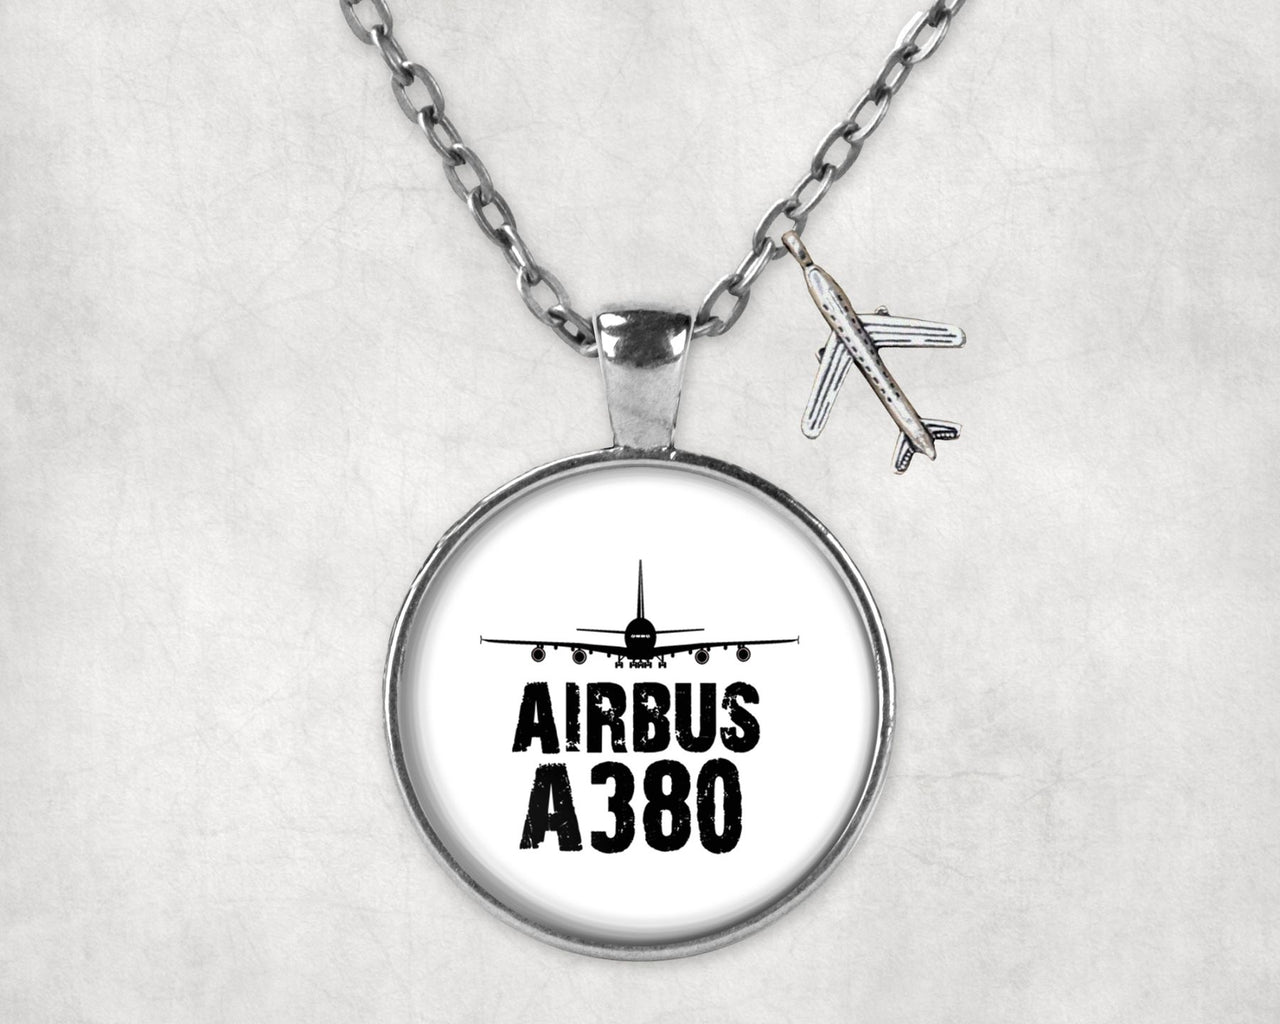 Airbus A380 & Plane Designed Necklaces